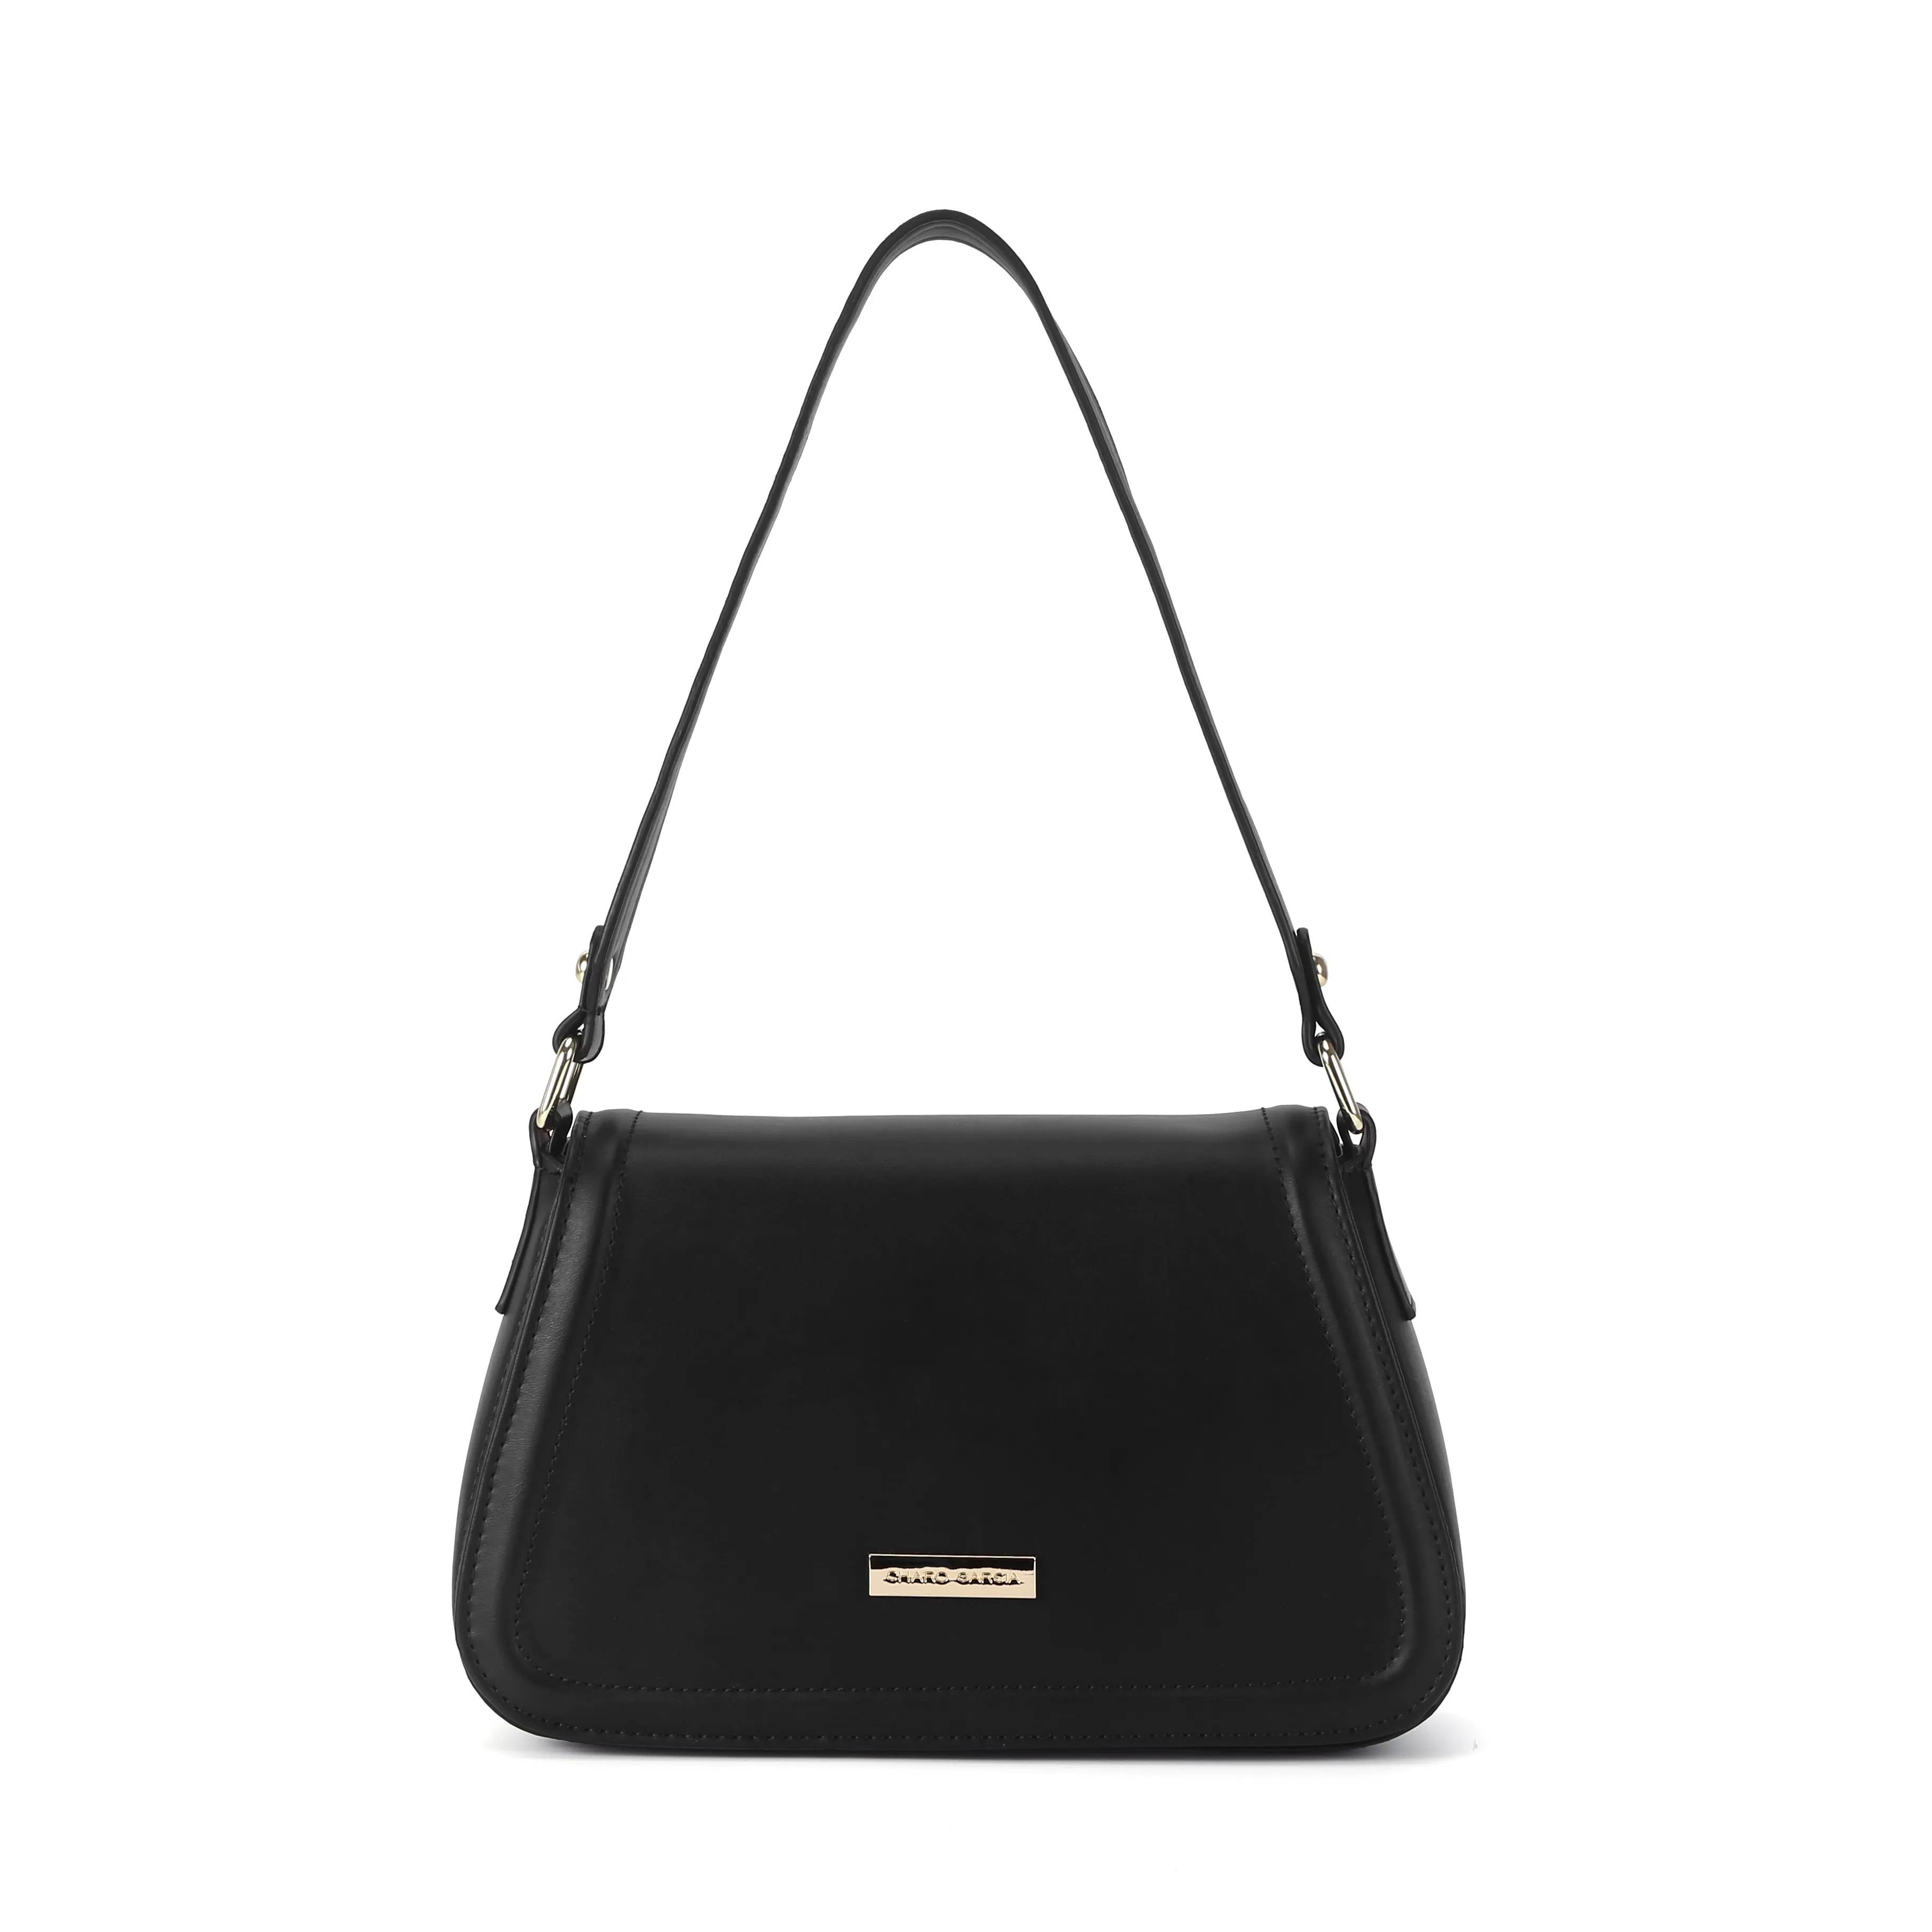 New single shoulder luxury bags fashion pu leather cheap bag womens shoulder bags ladies